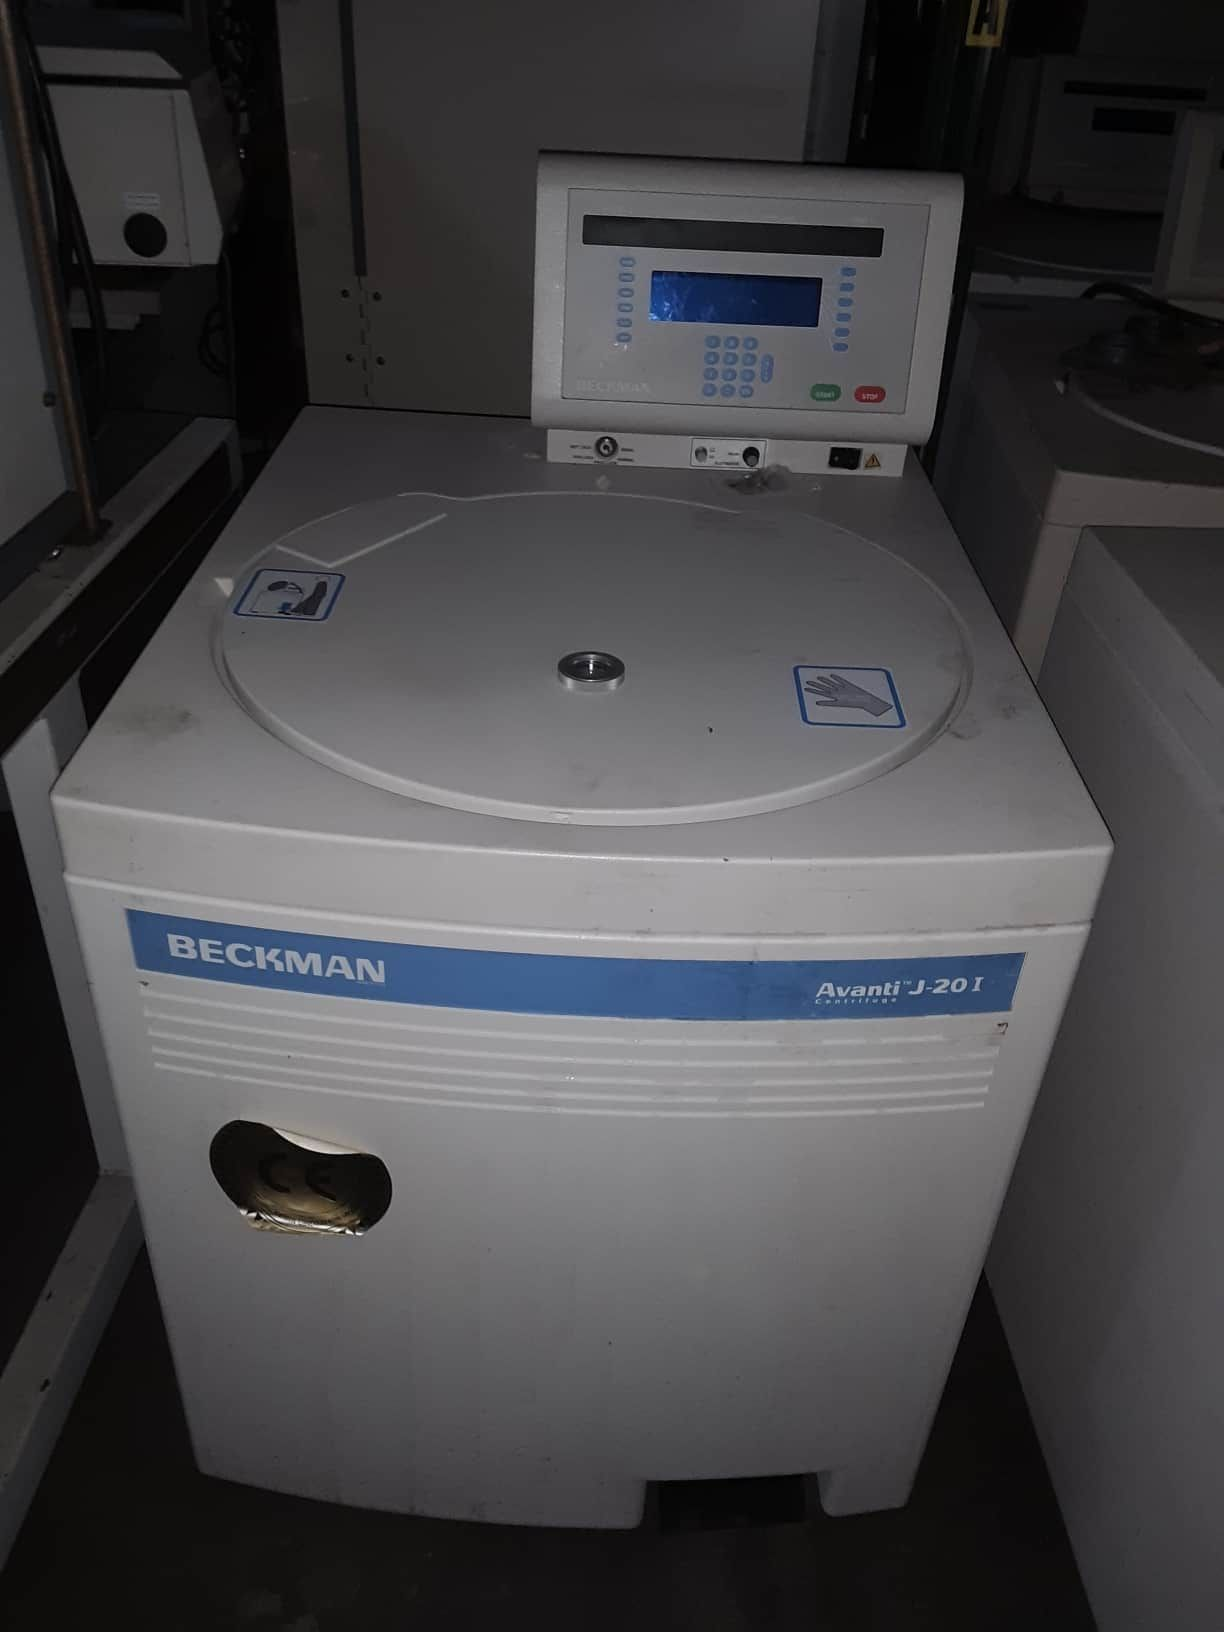 Beckman Avanti J-20I floor centrifuge with elutrator